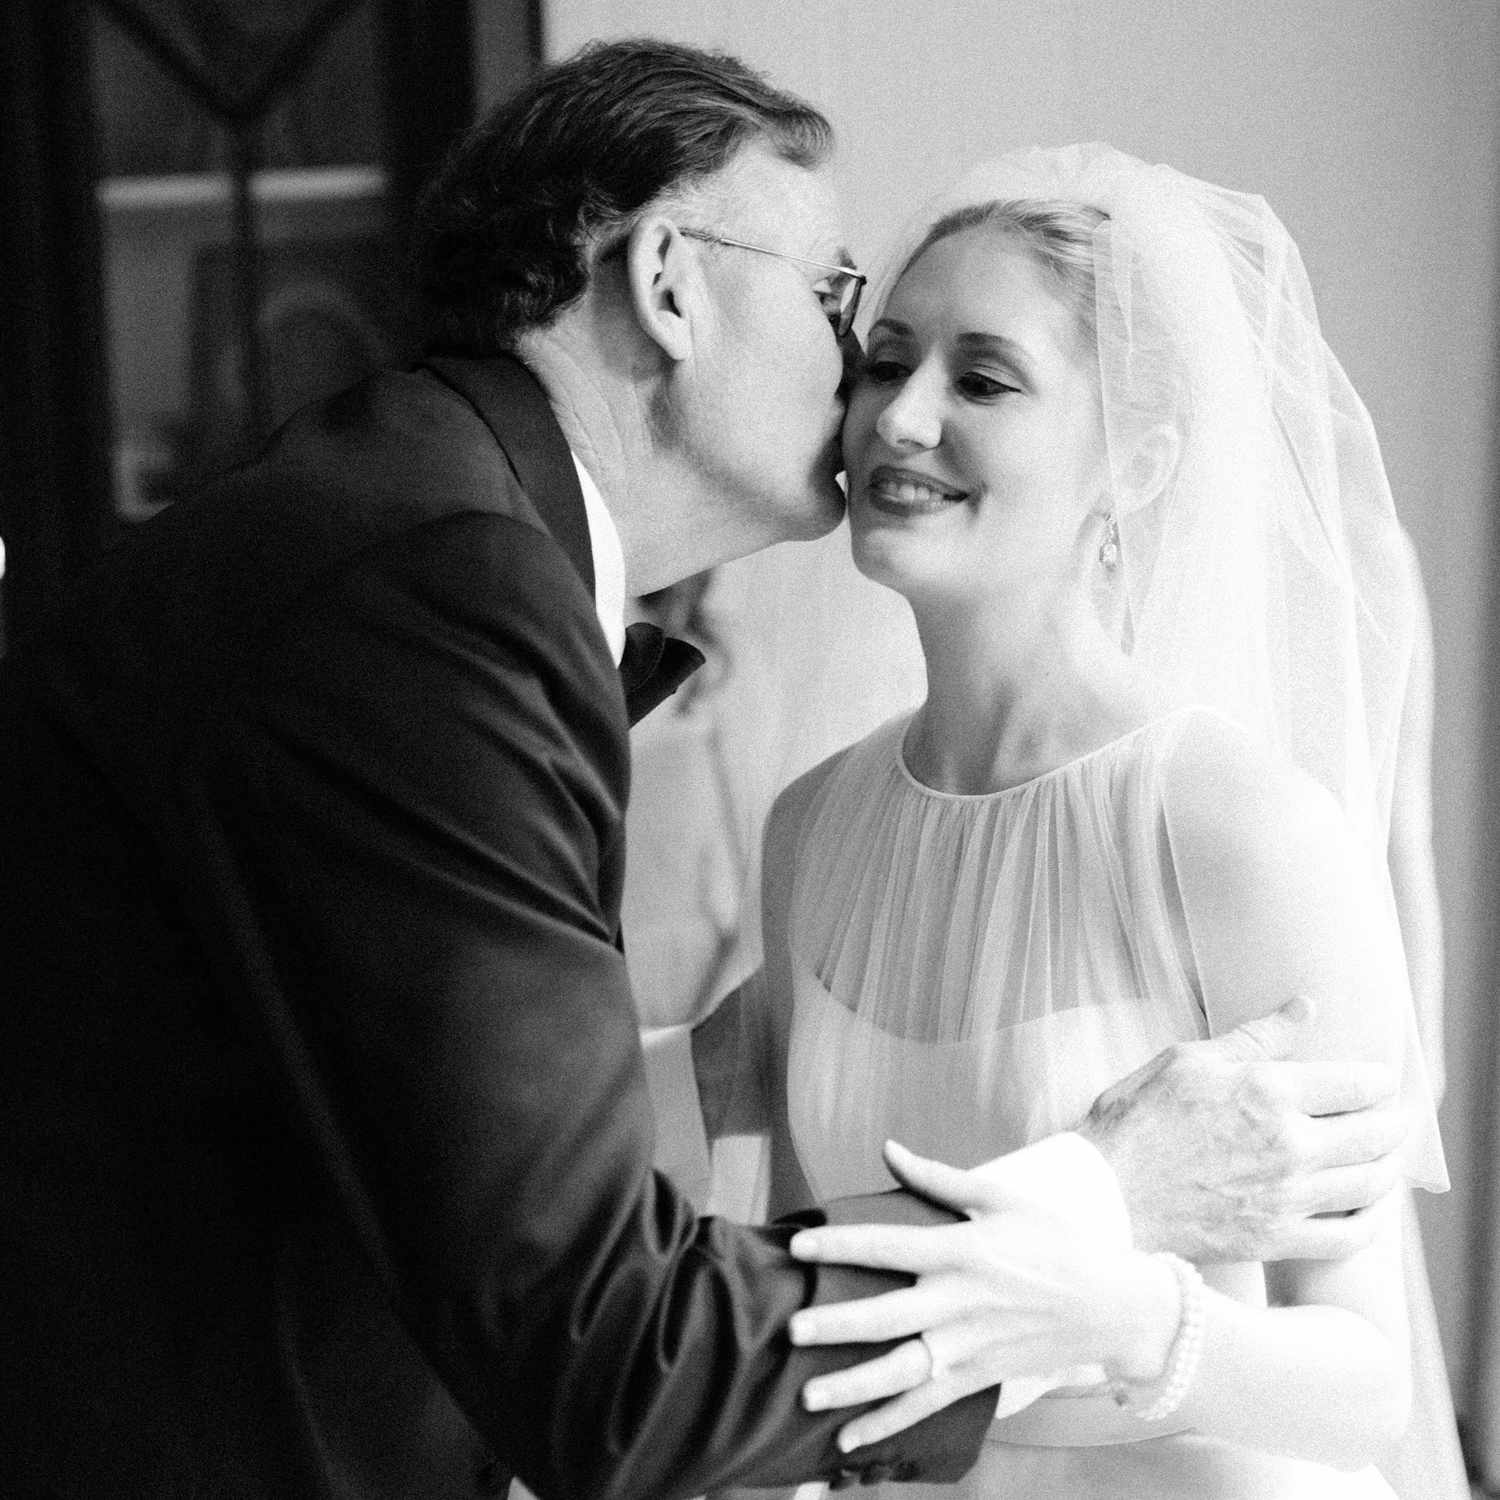 Father-Daughter Wedding Photos, Dad and Daughter Kiss